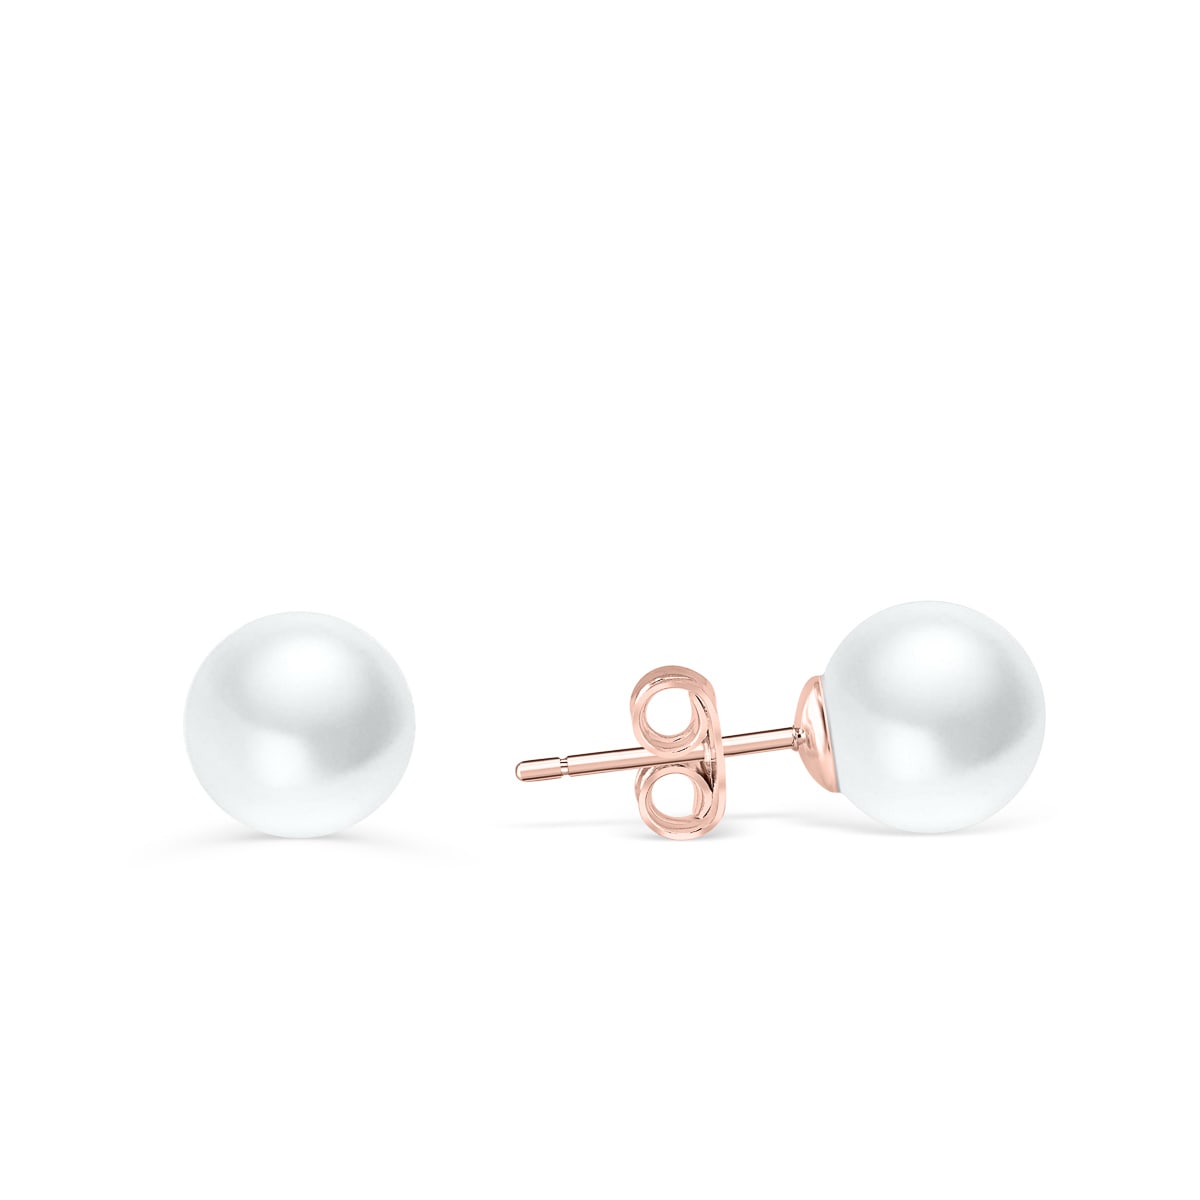 the pearl rose gold stud earrings